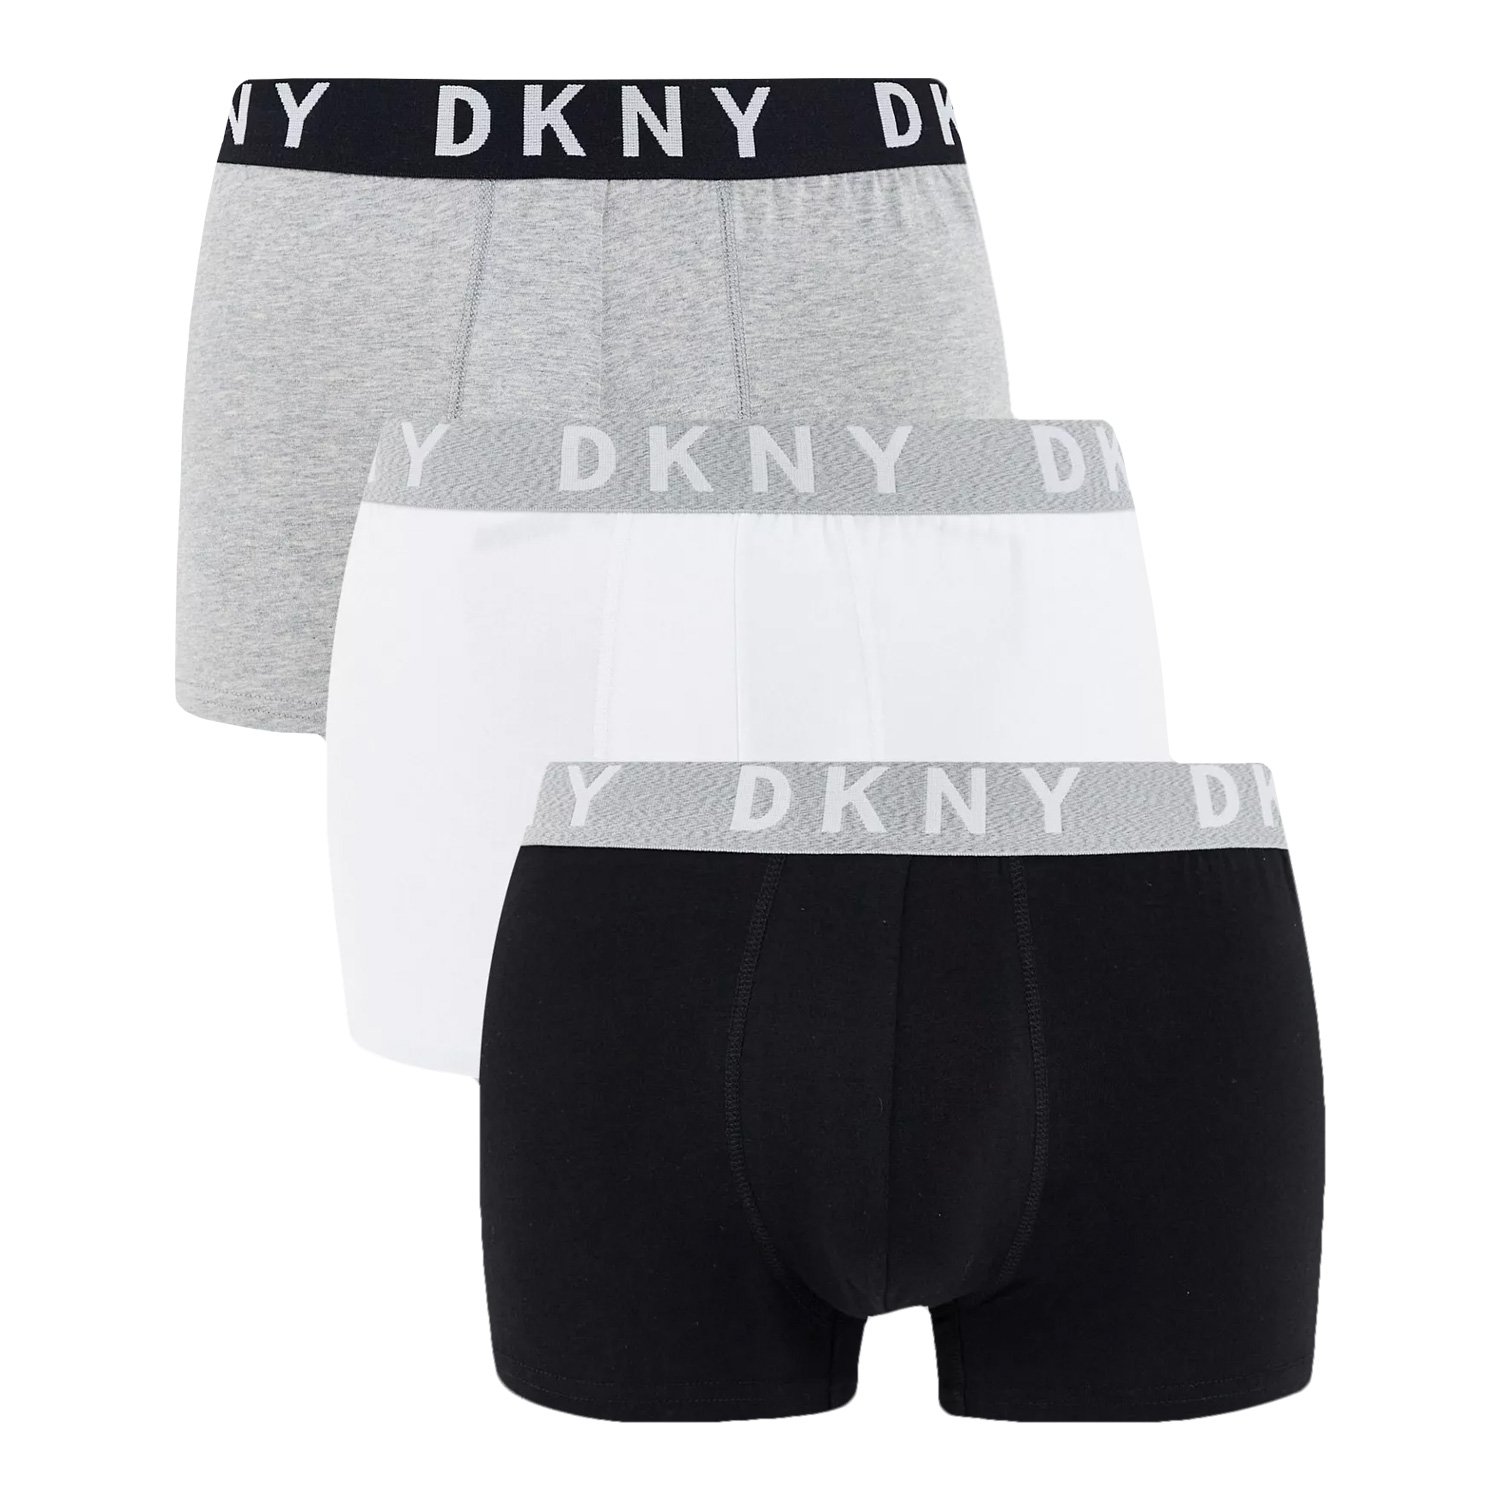 DKNY Mens Boxers 3 Pack Underwear Seattle Cotton Blend Desginer Logo Trunks